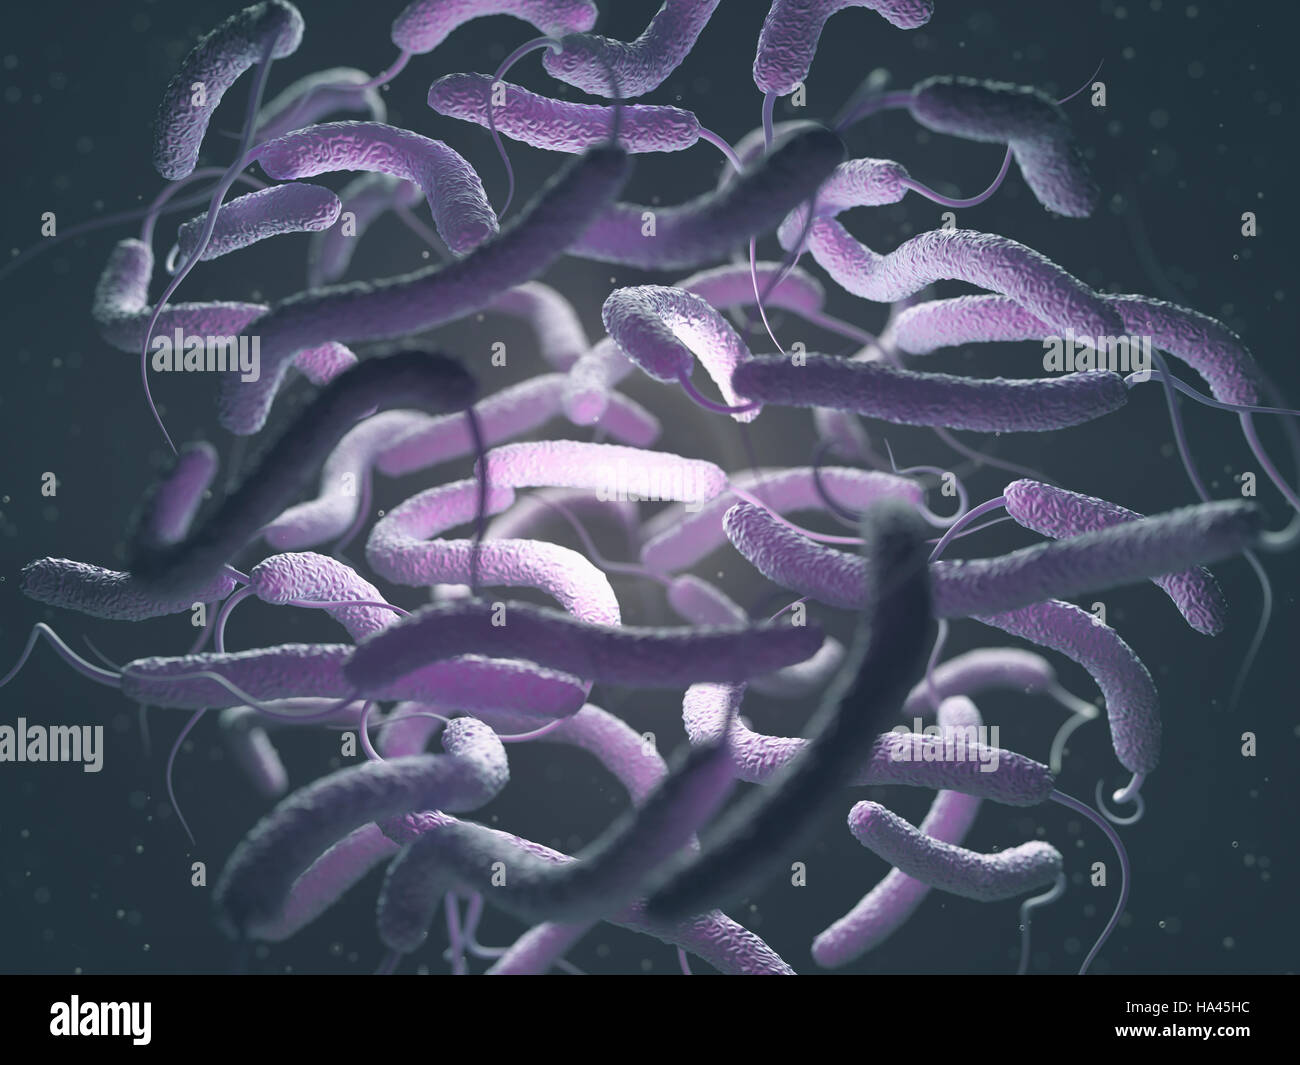 Vibrio cholerae, Gram-negative bacteria. 3D illustration of bacteria with flagella. Stock Photo